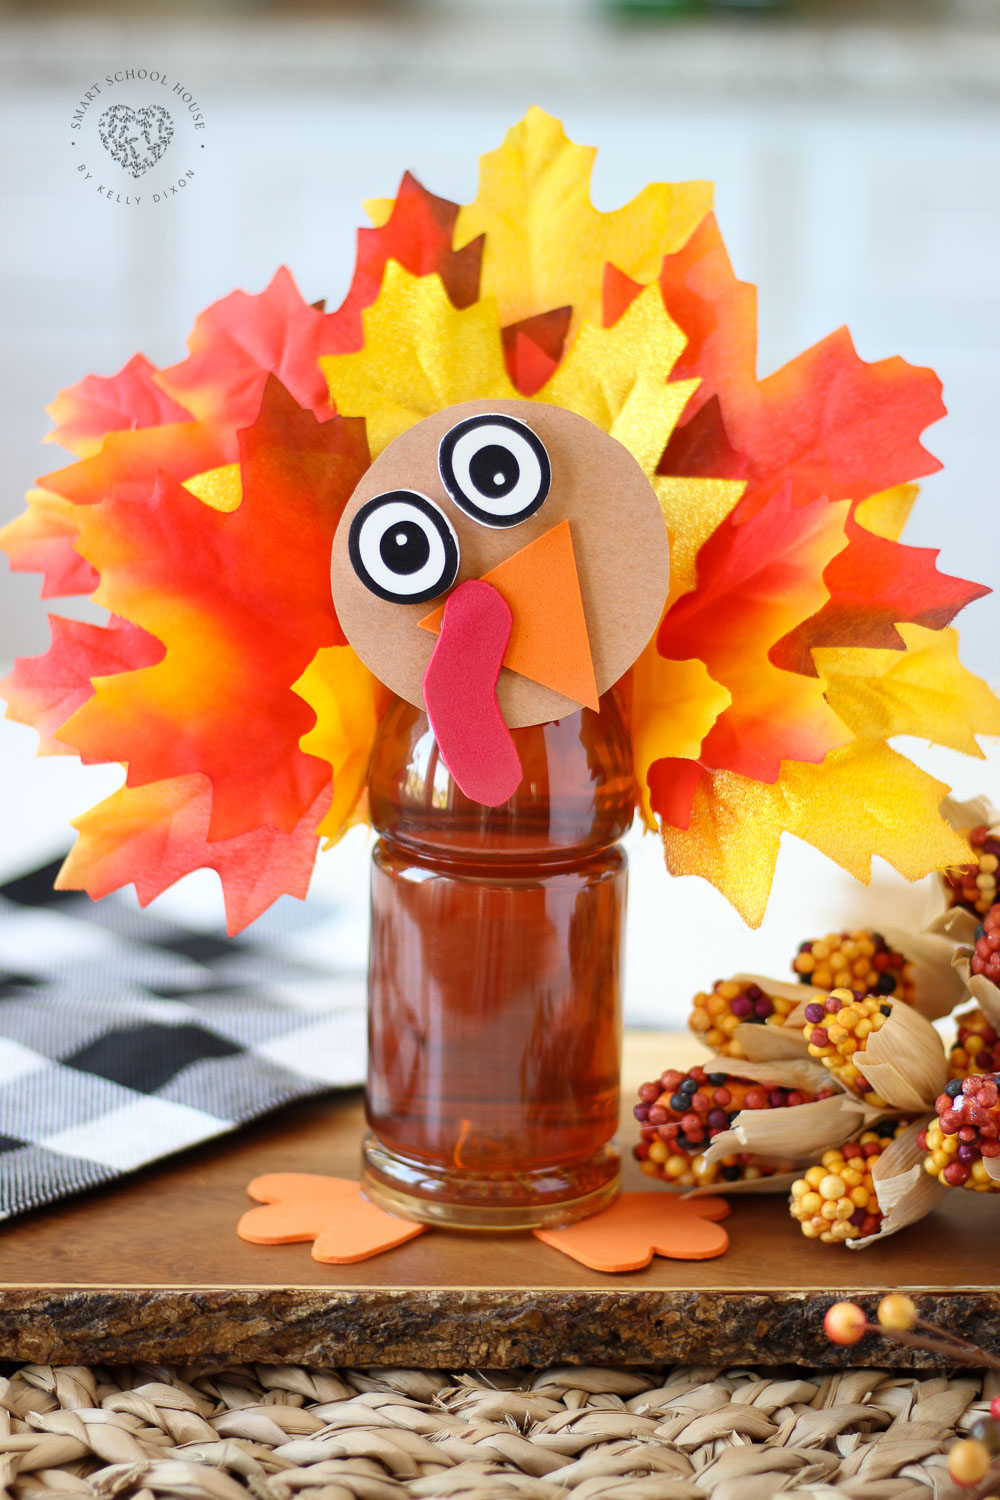 Gobble gobble! Adorable Tea Bottle Turkey craft idea for Thanksgiving.